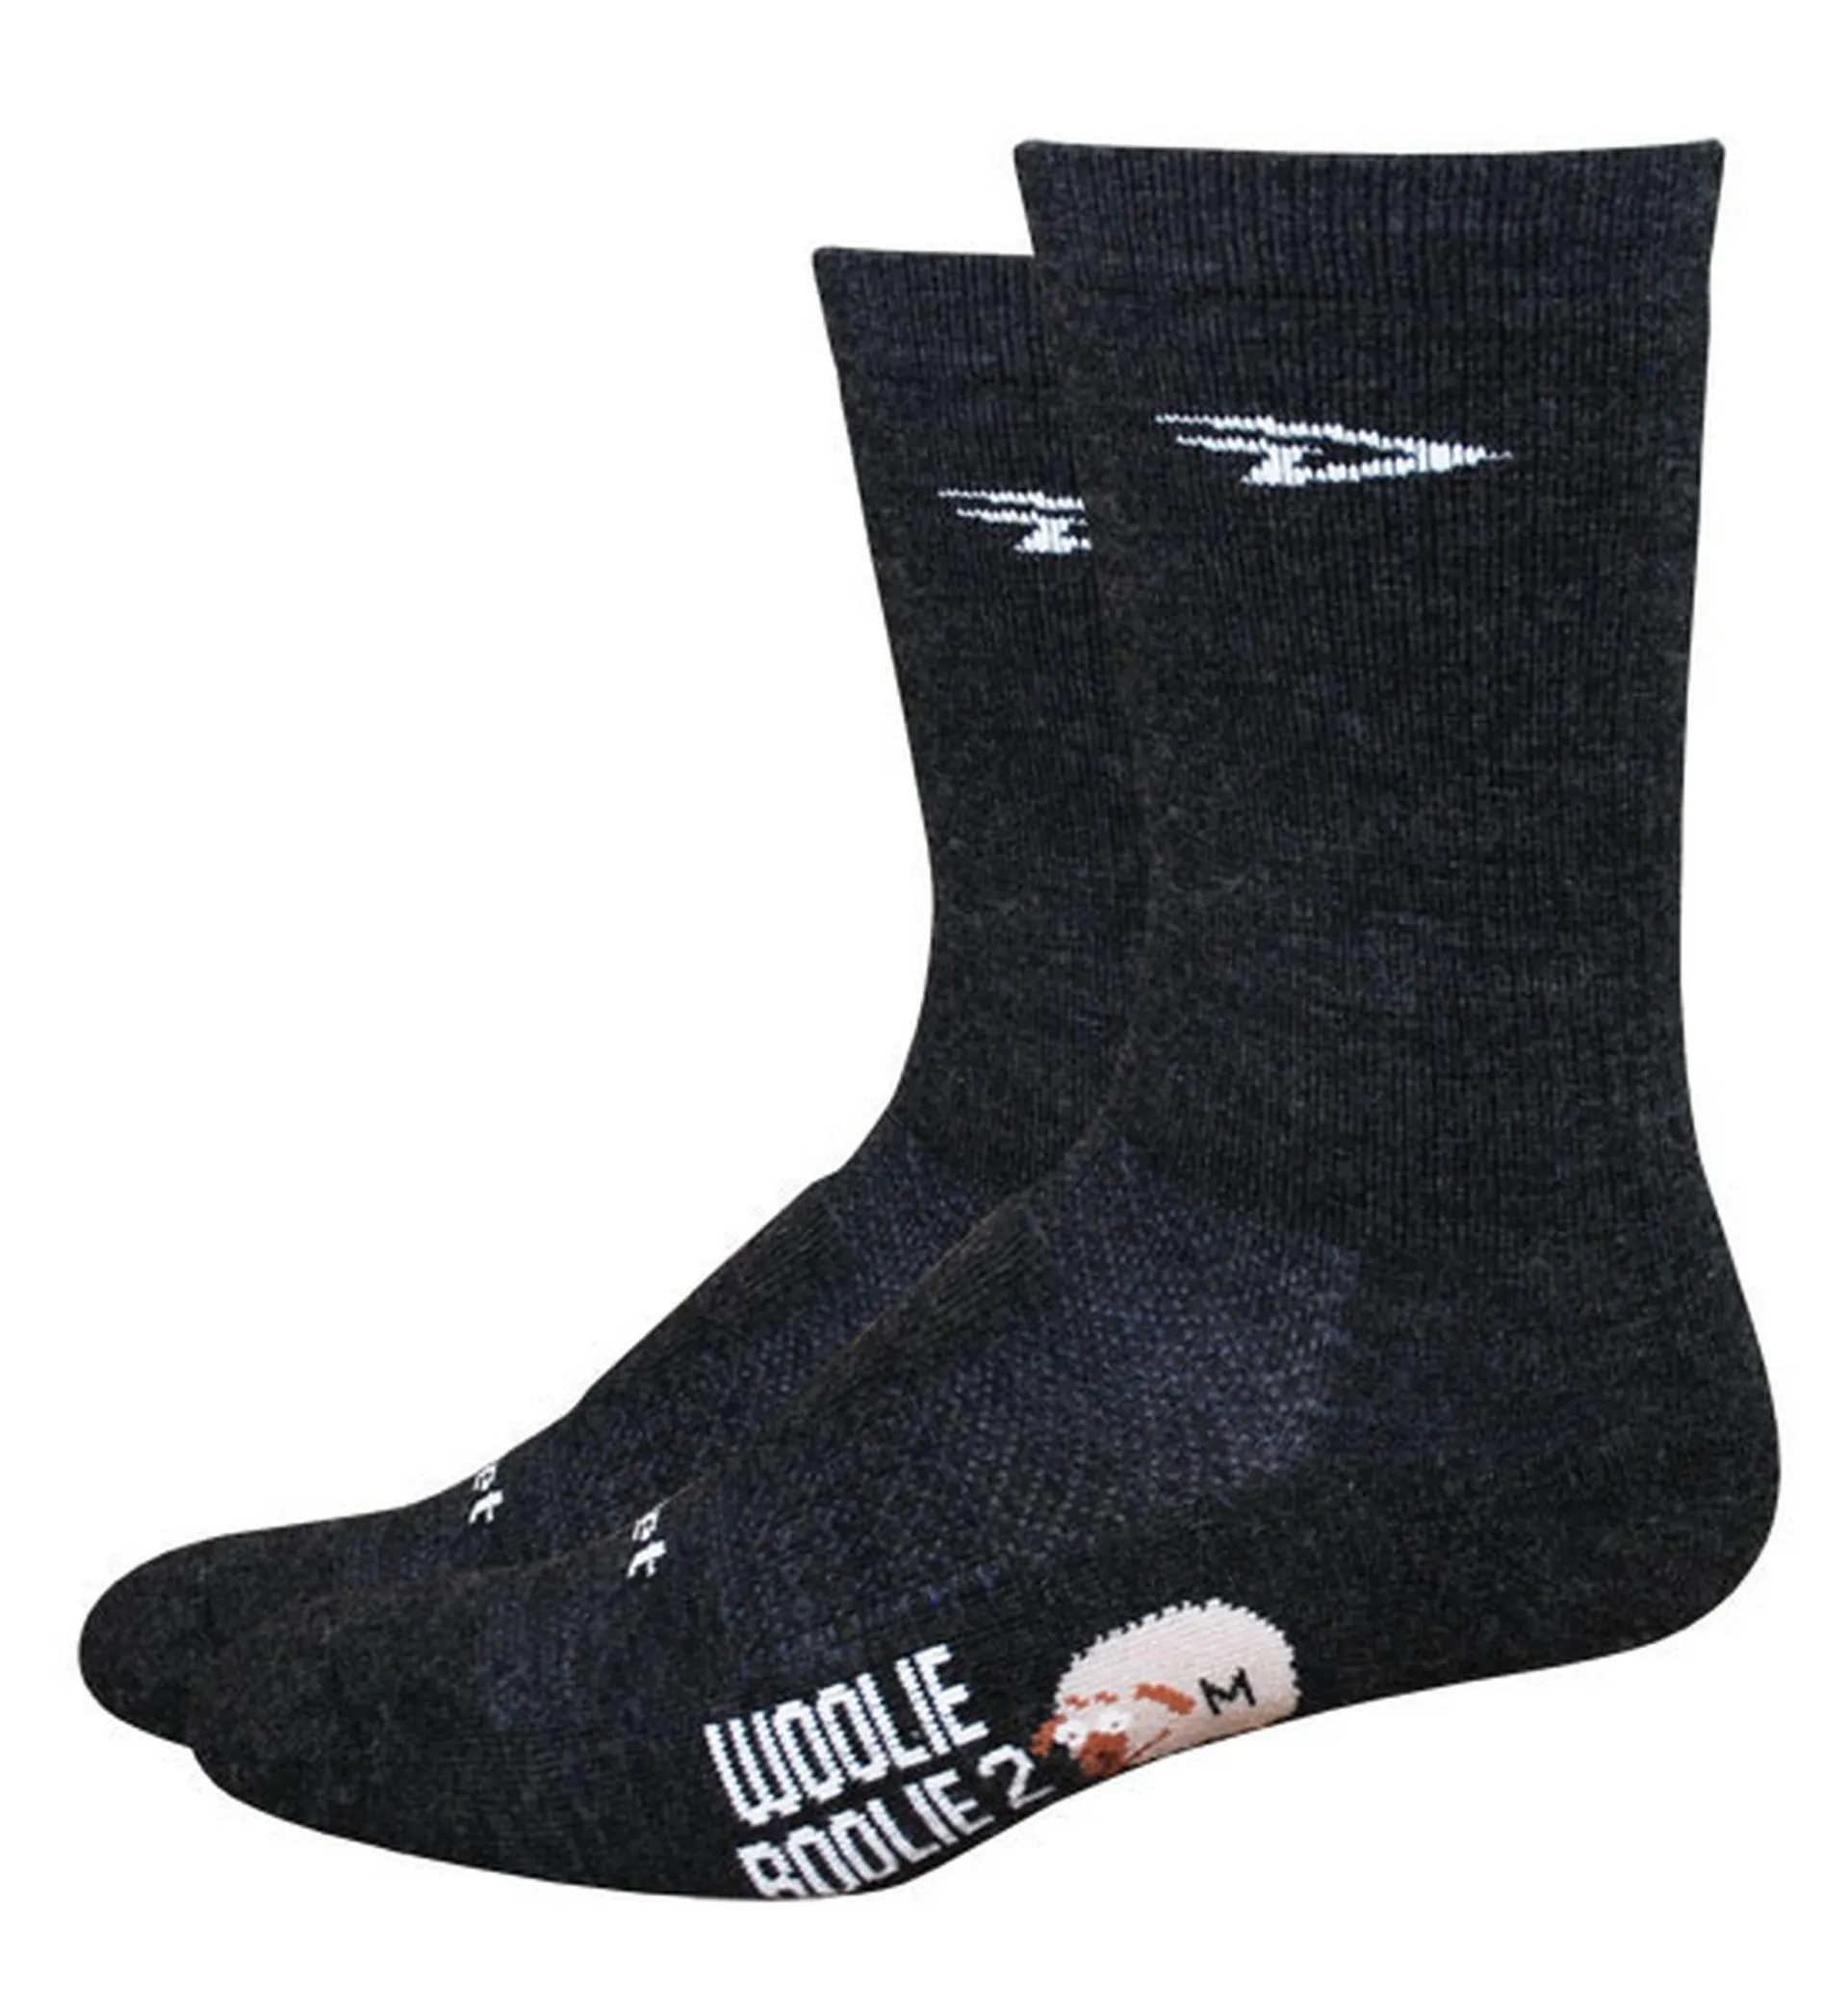 Defeet Woolie Boolie 2 6" Cuff Socks